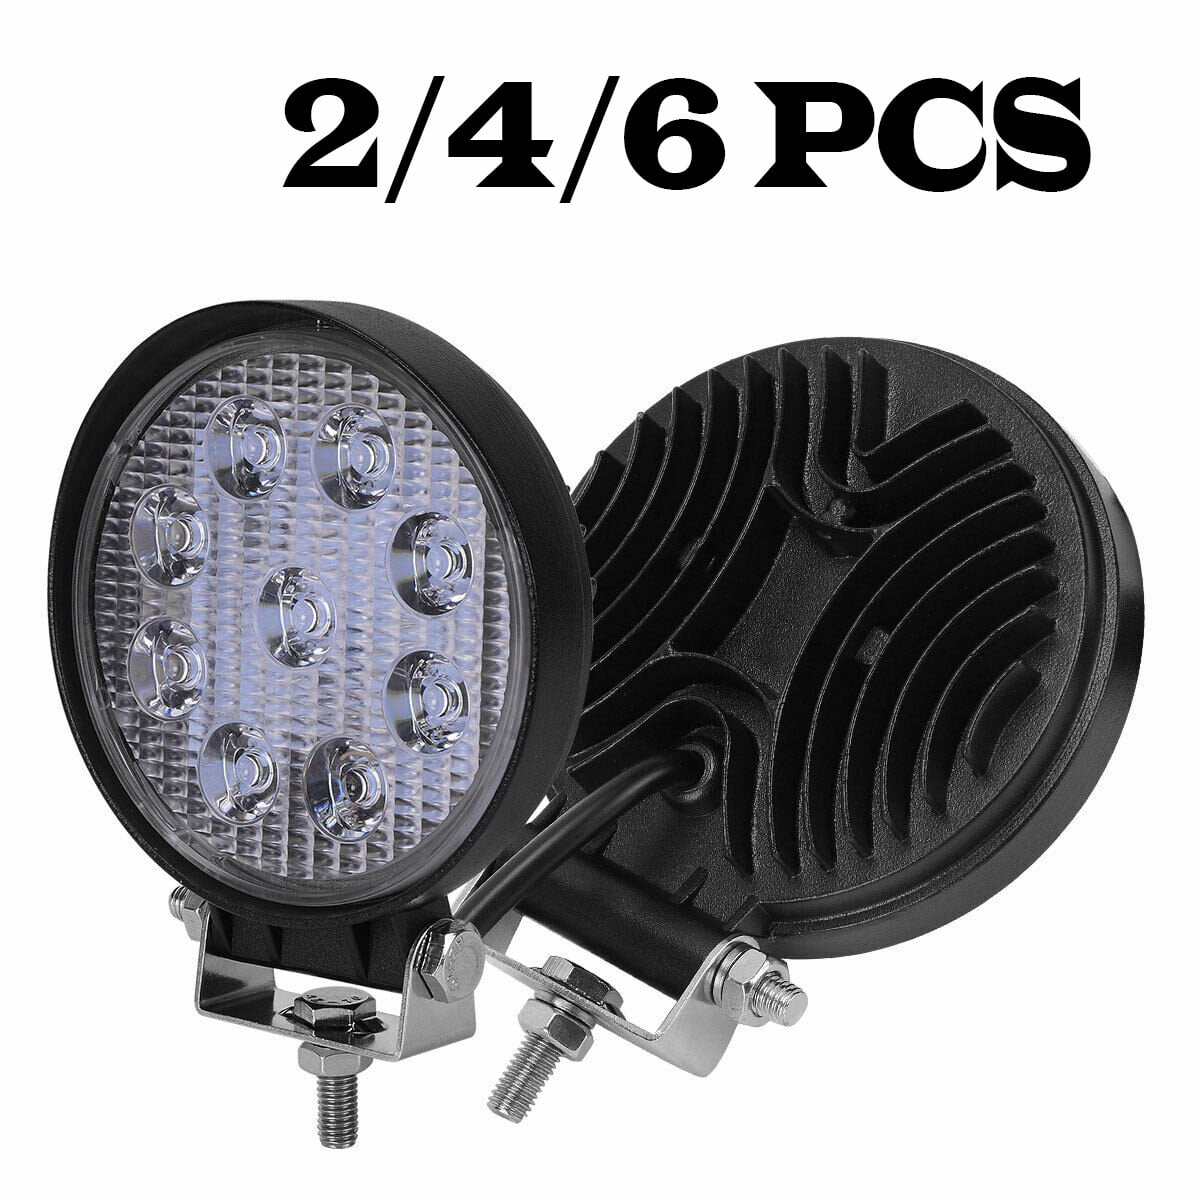 2pcs Car Motorcycle Headlight Spot Fog Lights LED Front Head Lamp 12V 27W ATV US